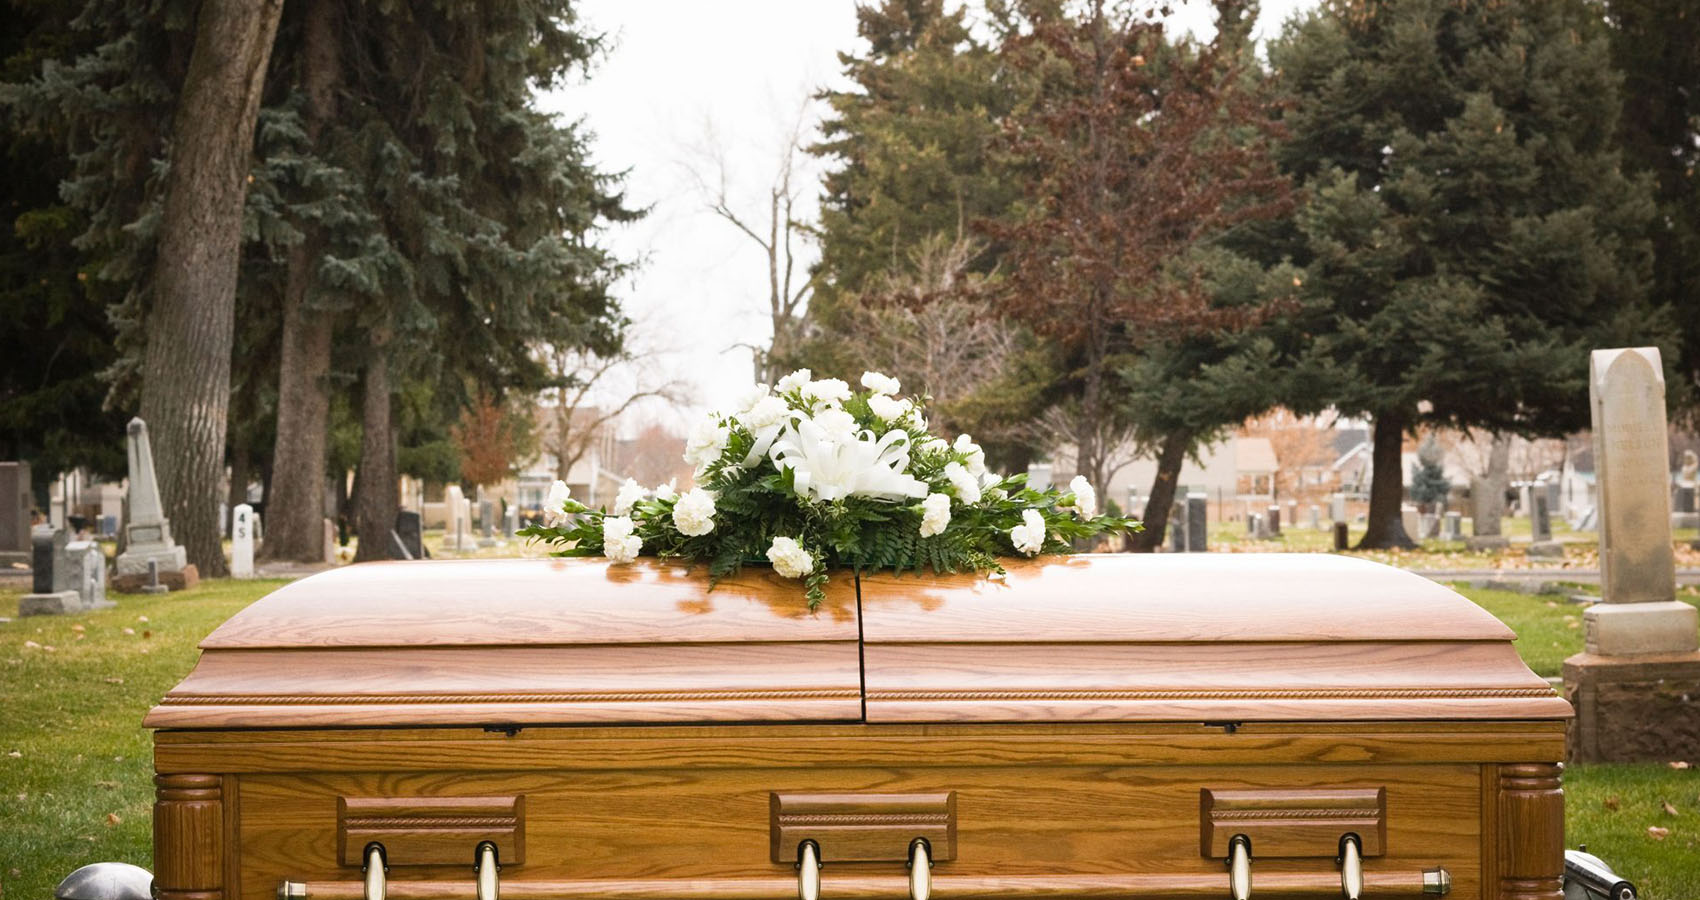 dad jokes - funeral cases